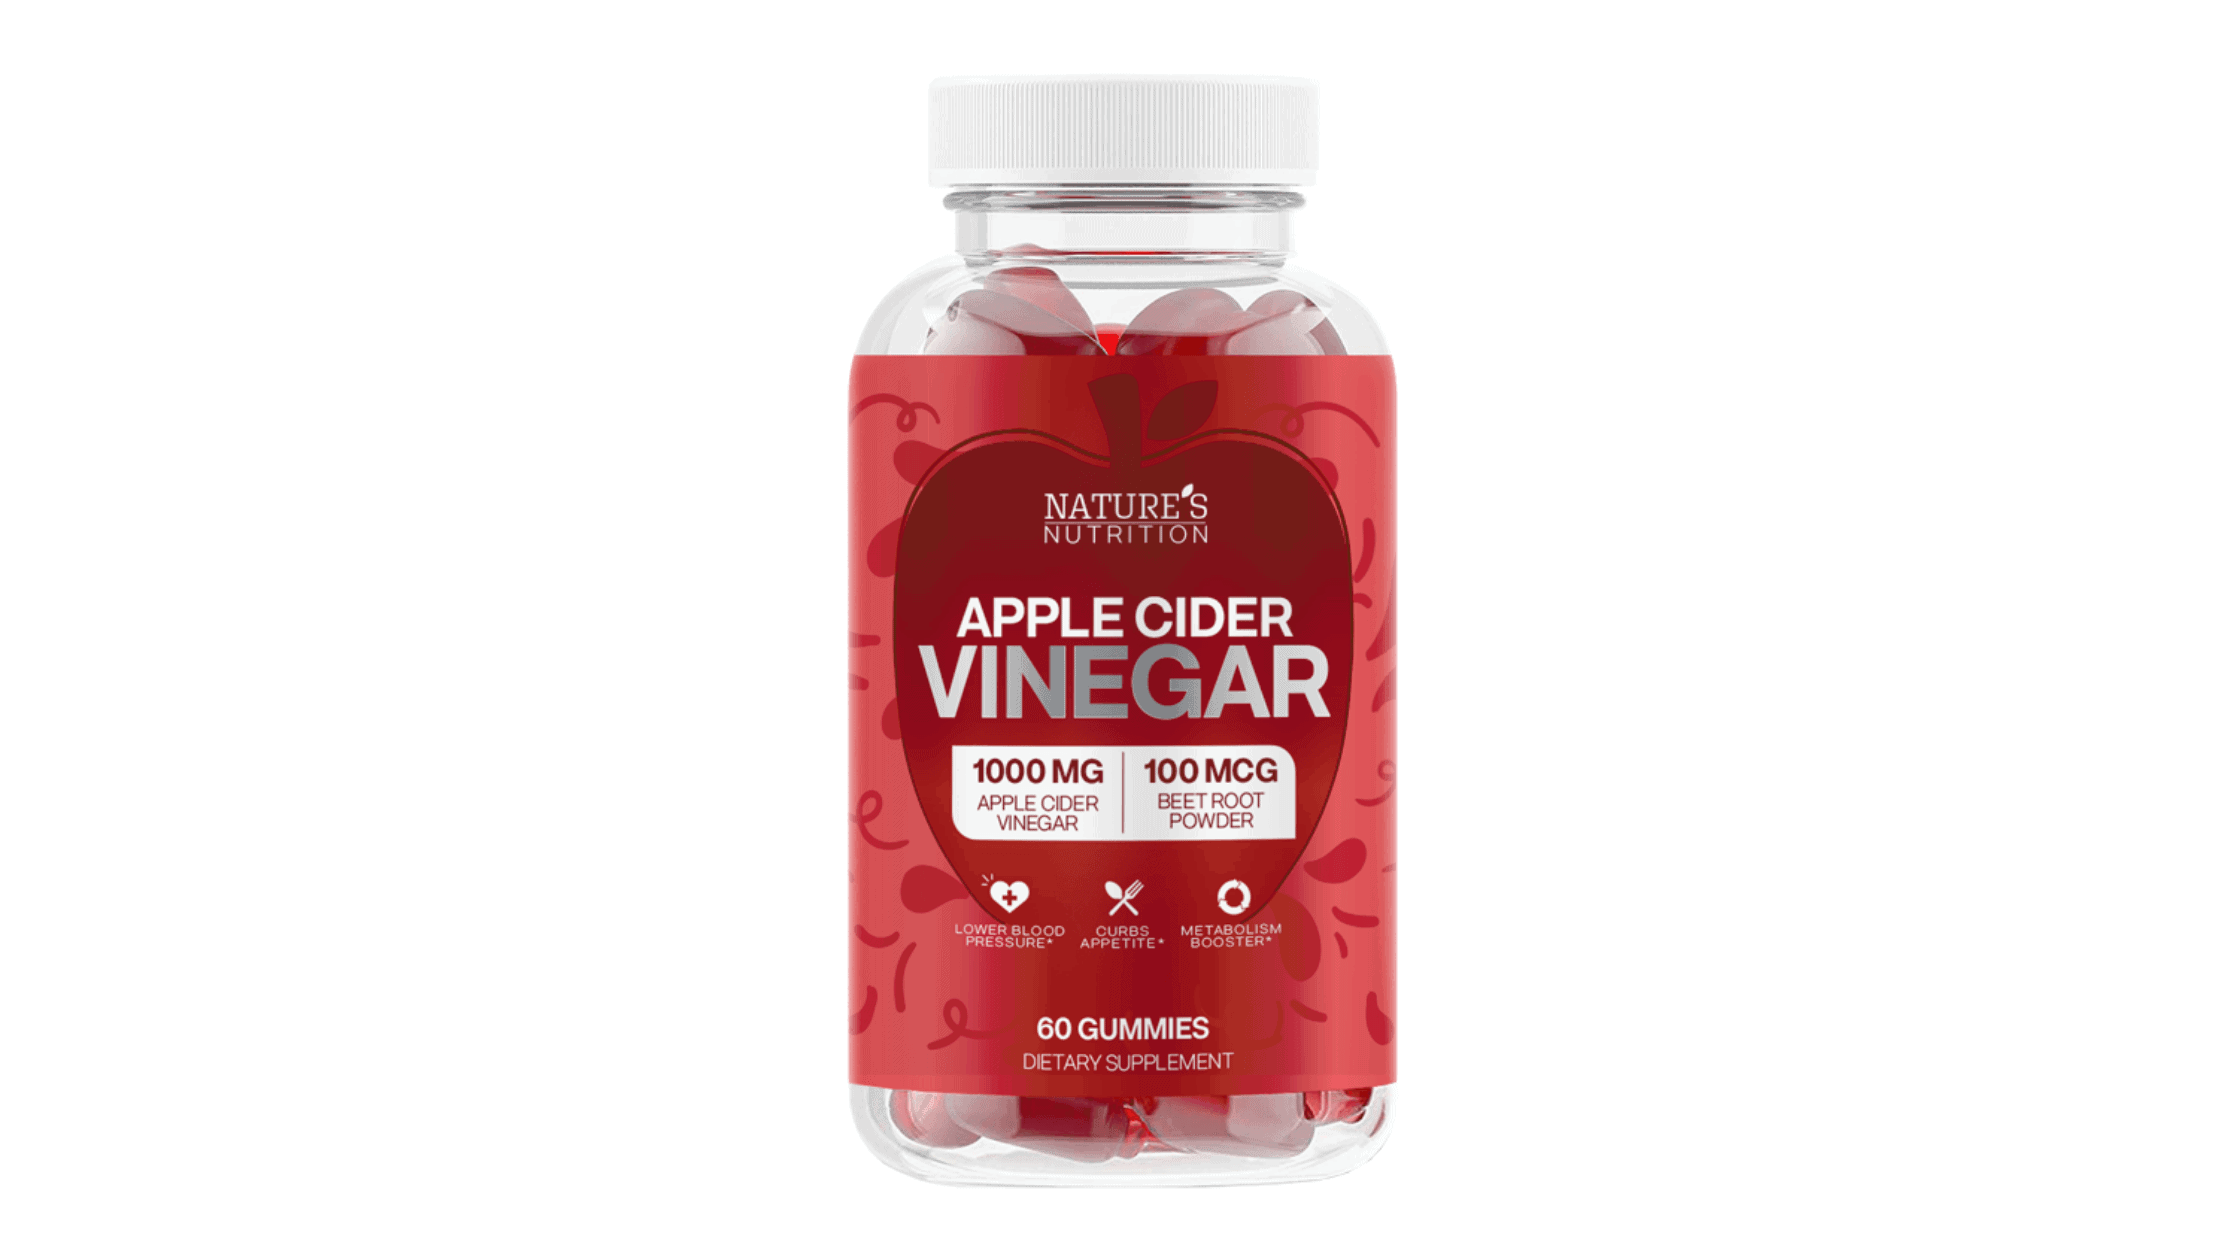 Nature's Nutrition Apple Cider Vinegar Gummies Reviews